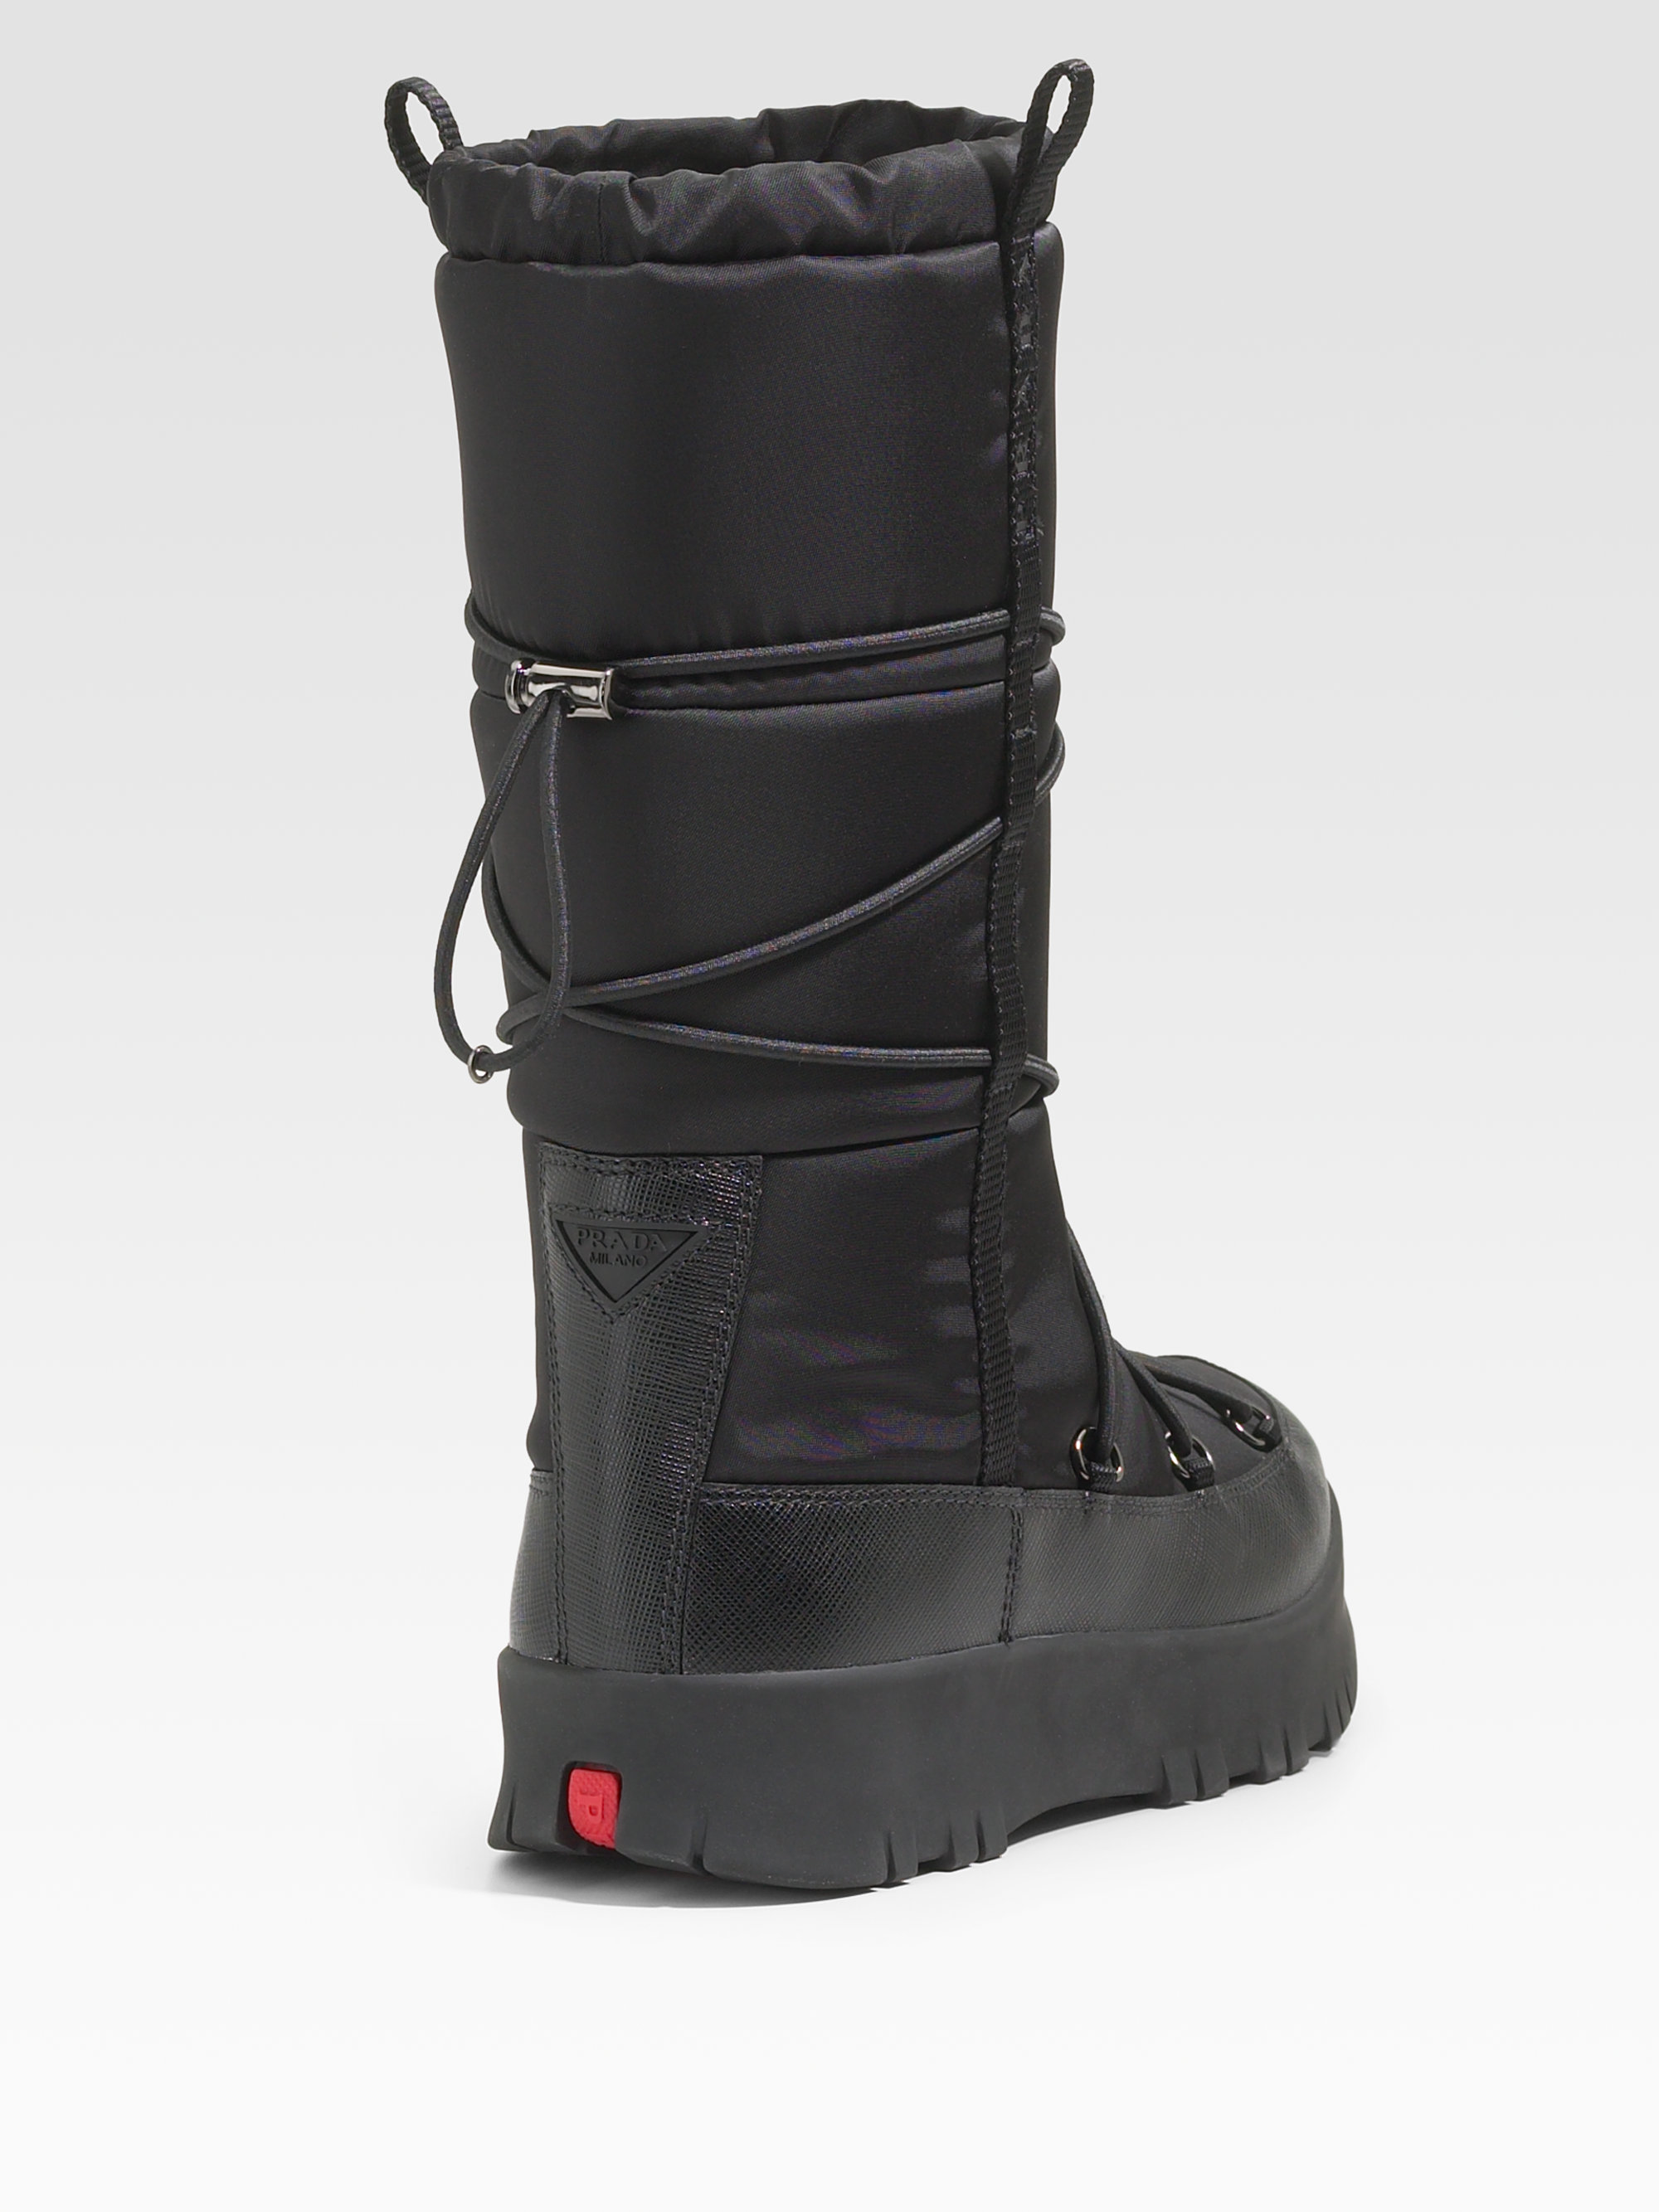 Prada Winter Boots in Black - Lyst